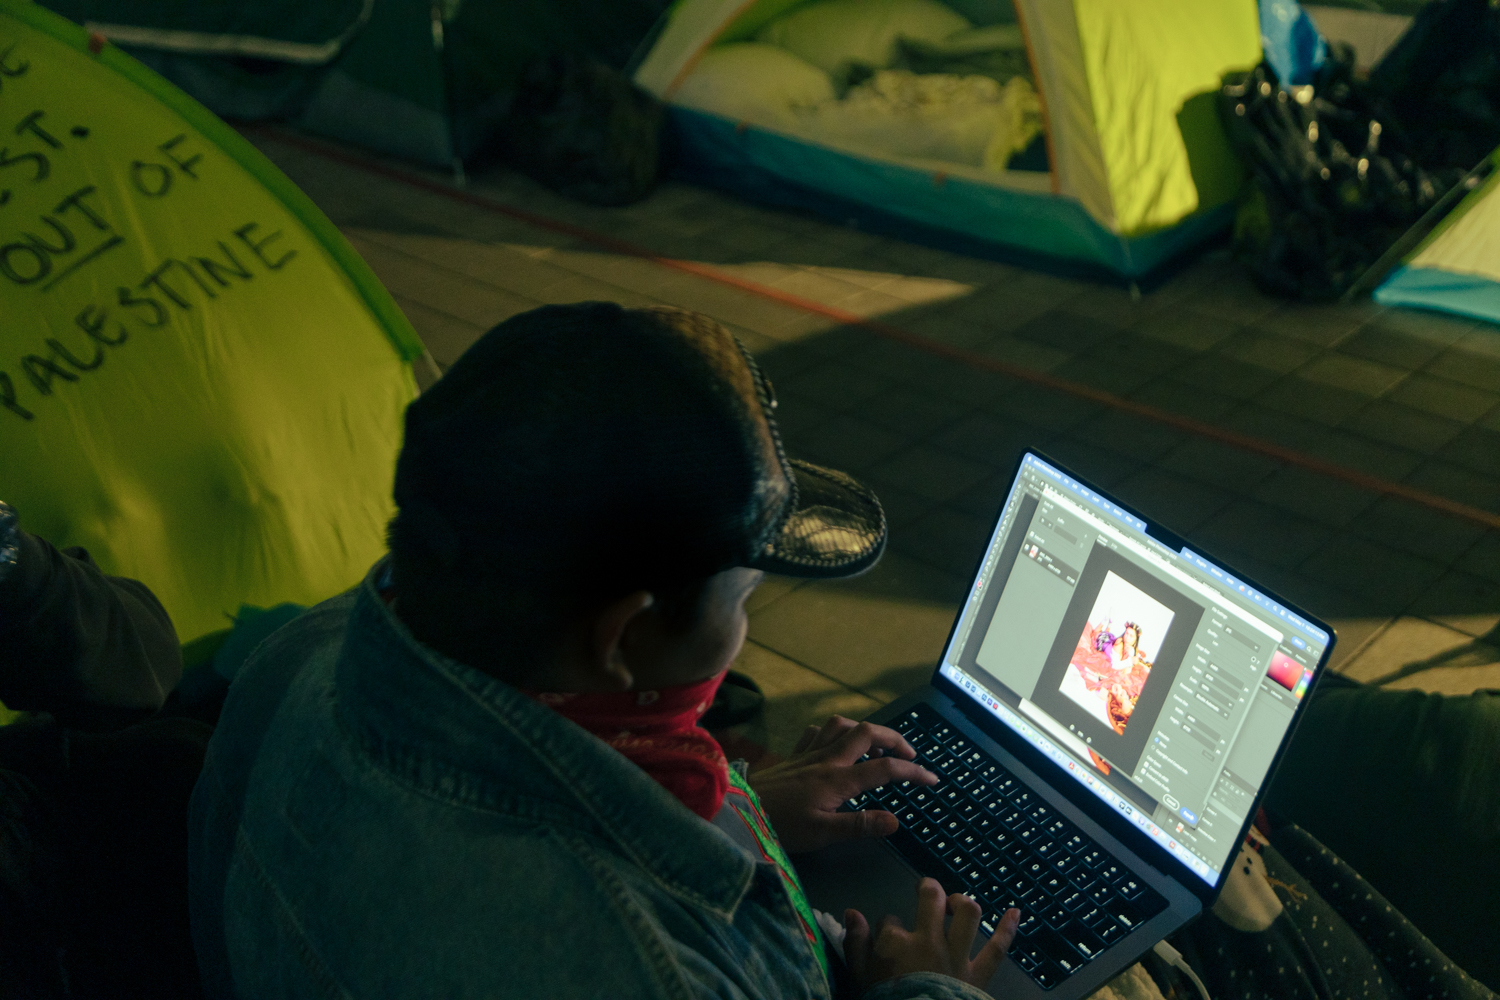 A protester edits photos inside the encampment.